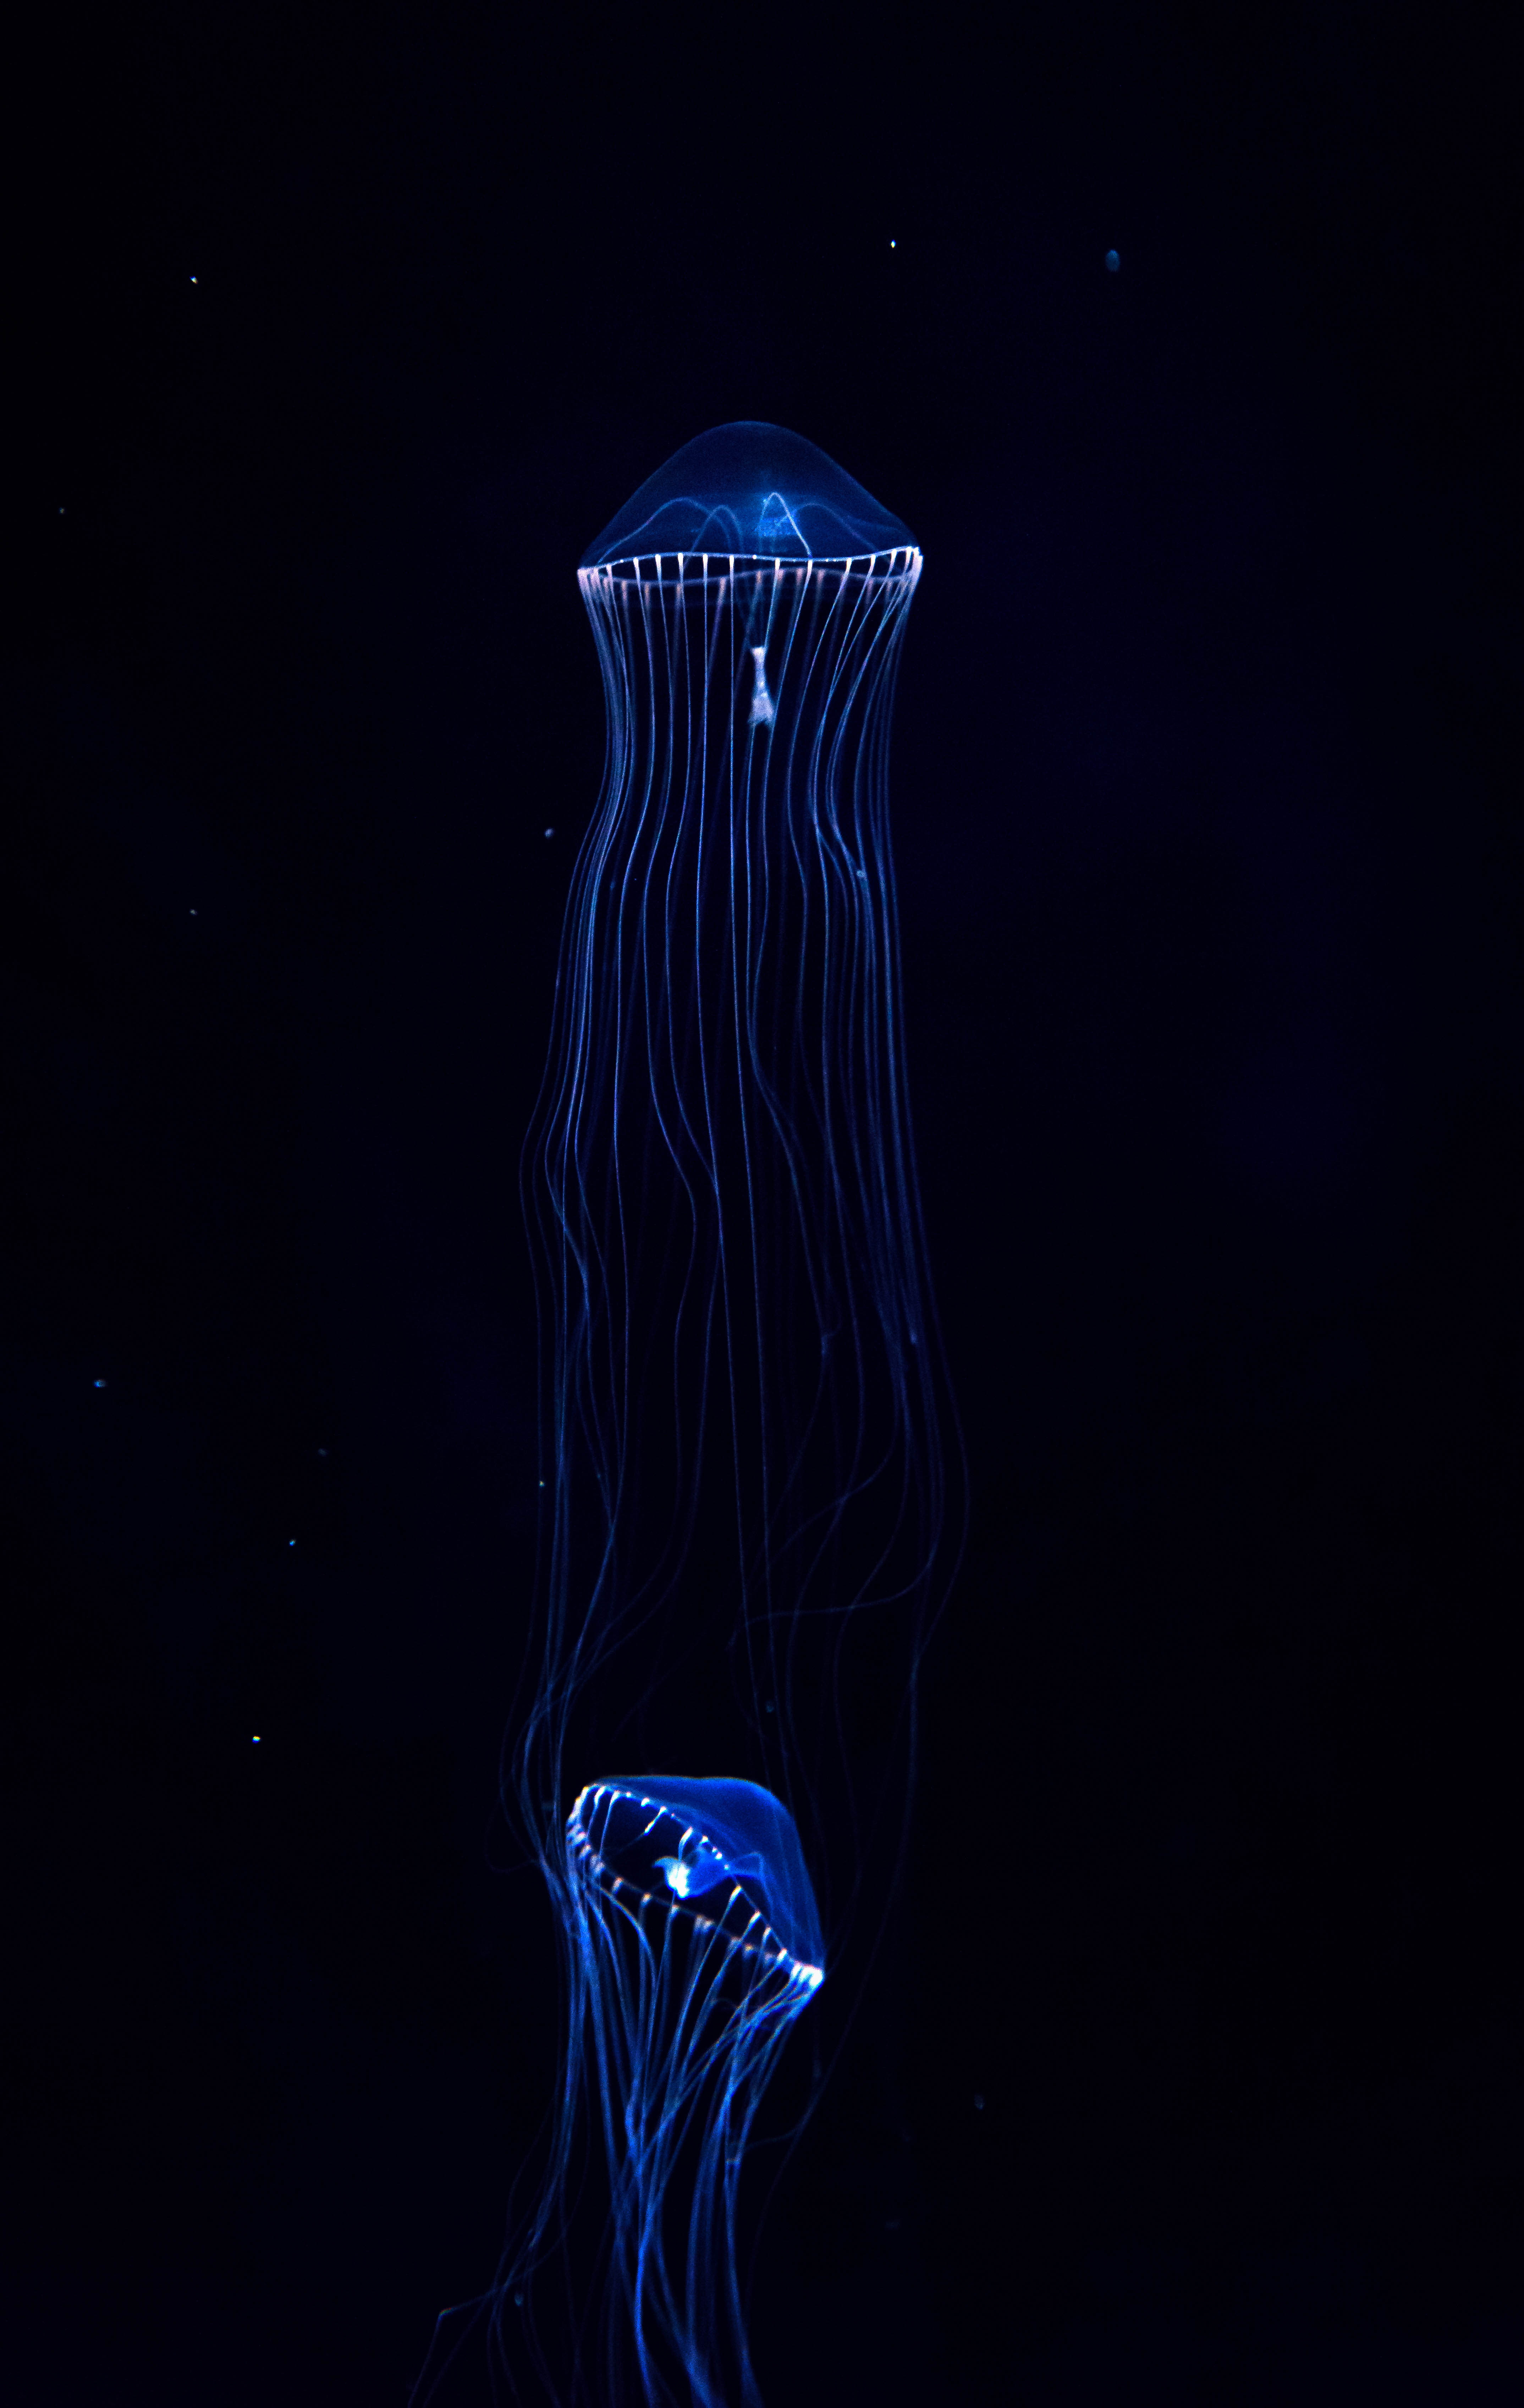 dark, tentacles, jellyfish, underwater world